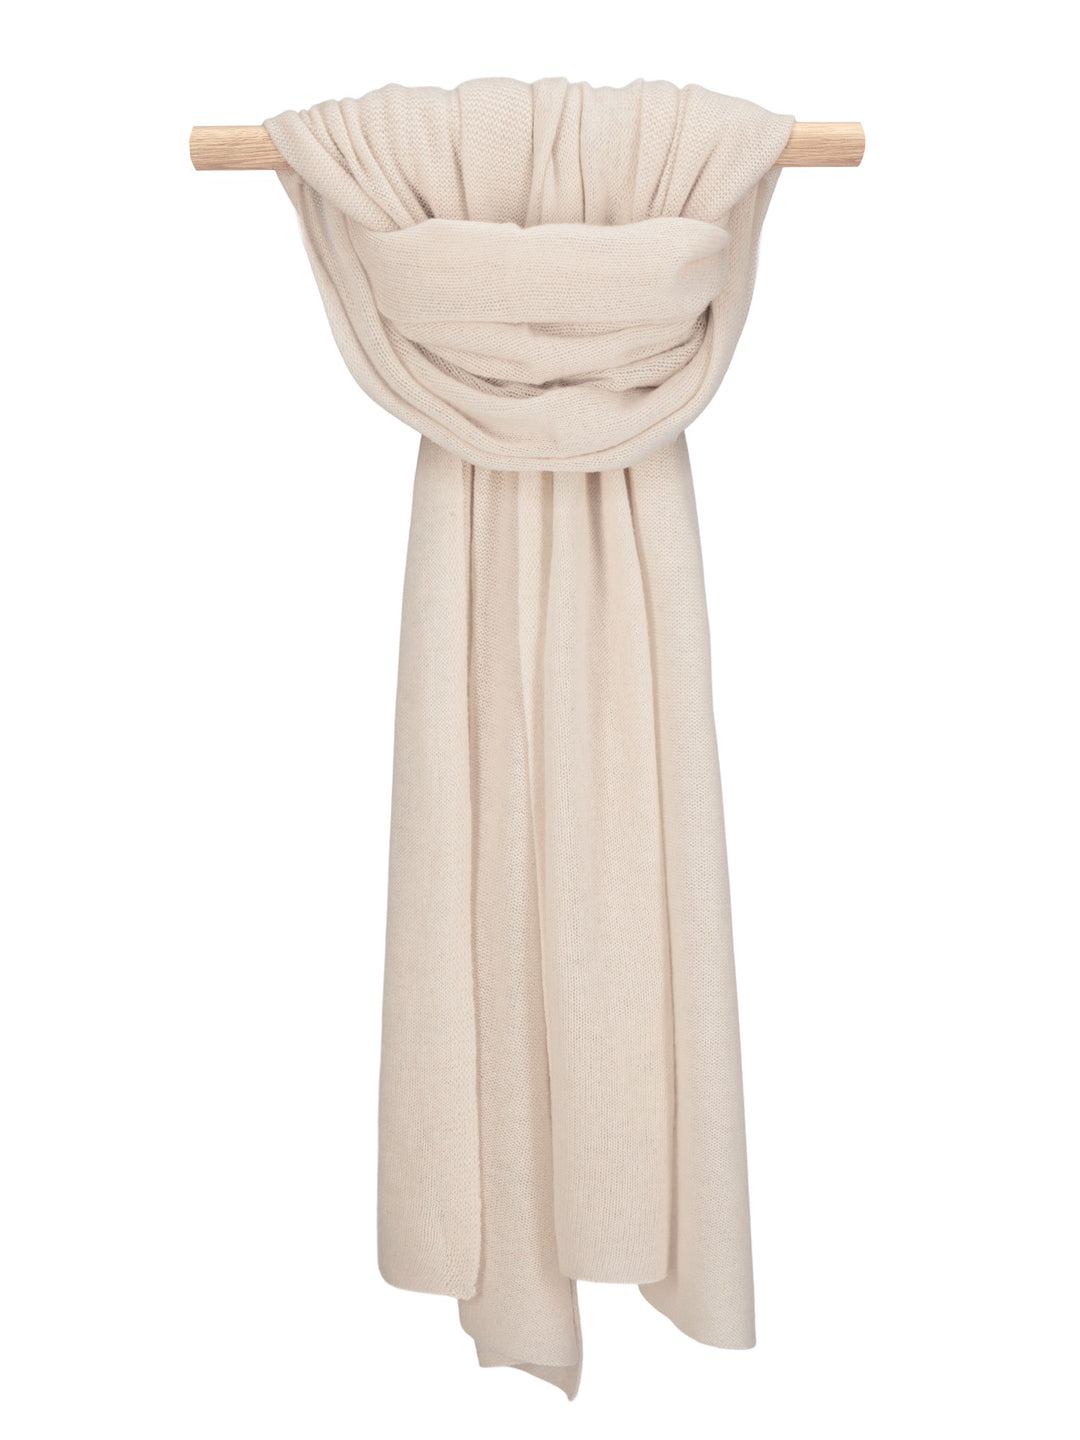 Cashmere scarf "Flow" 100% cashmere from Kashmina. Norwegian design. Color: Cream.